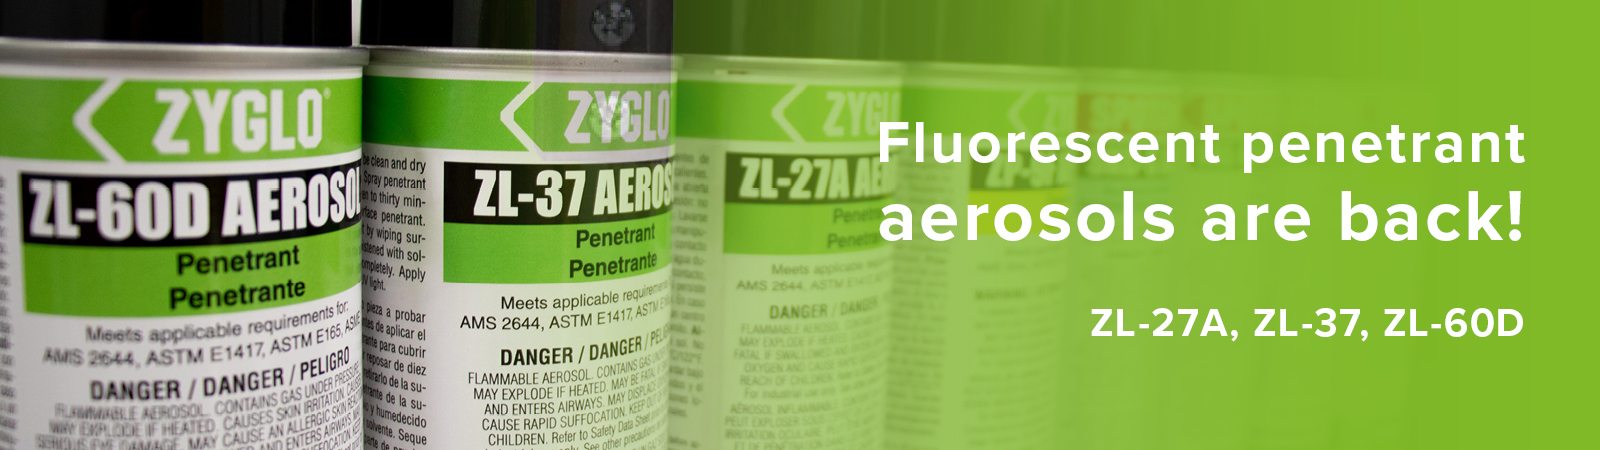 Fluorescent penetrant aerosols are back!